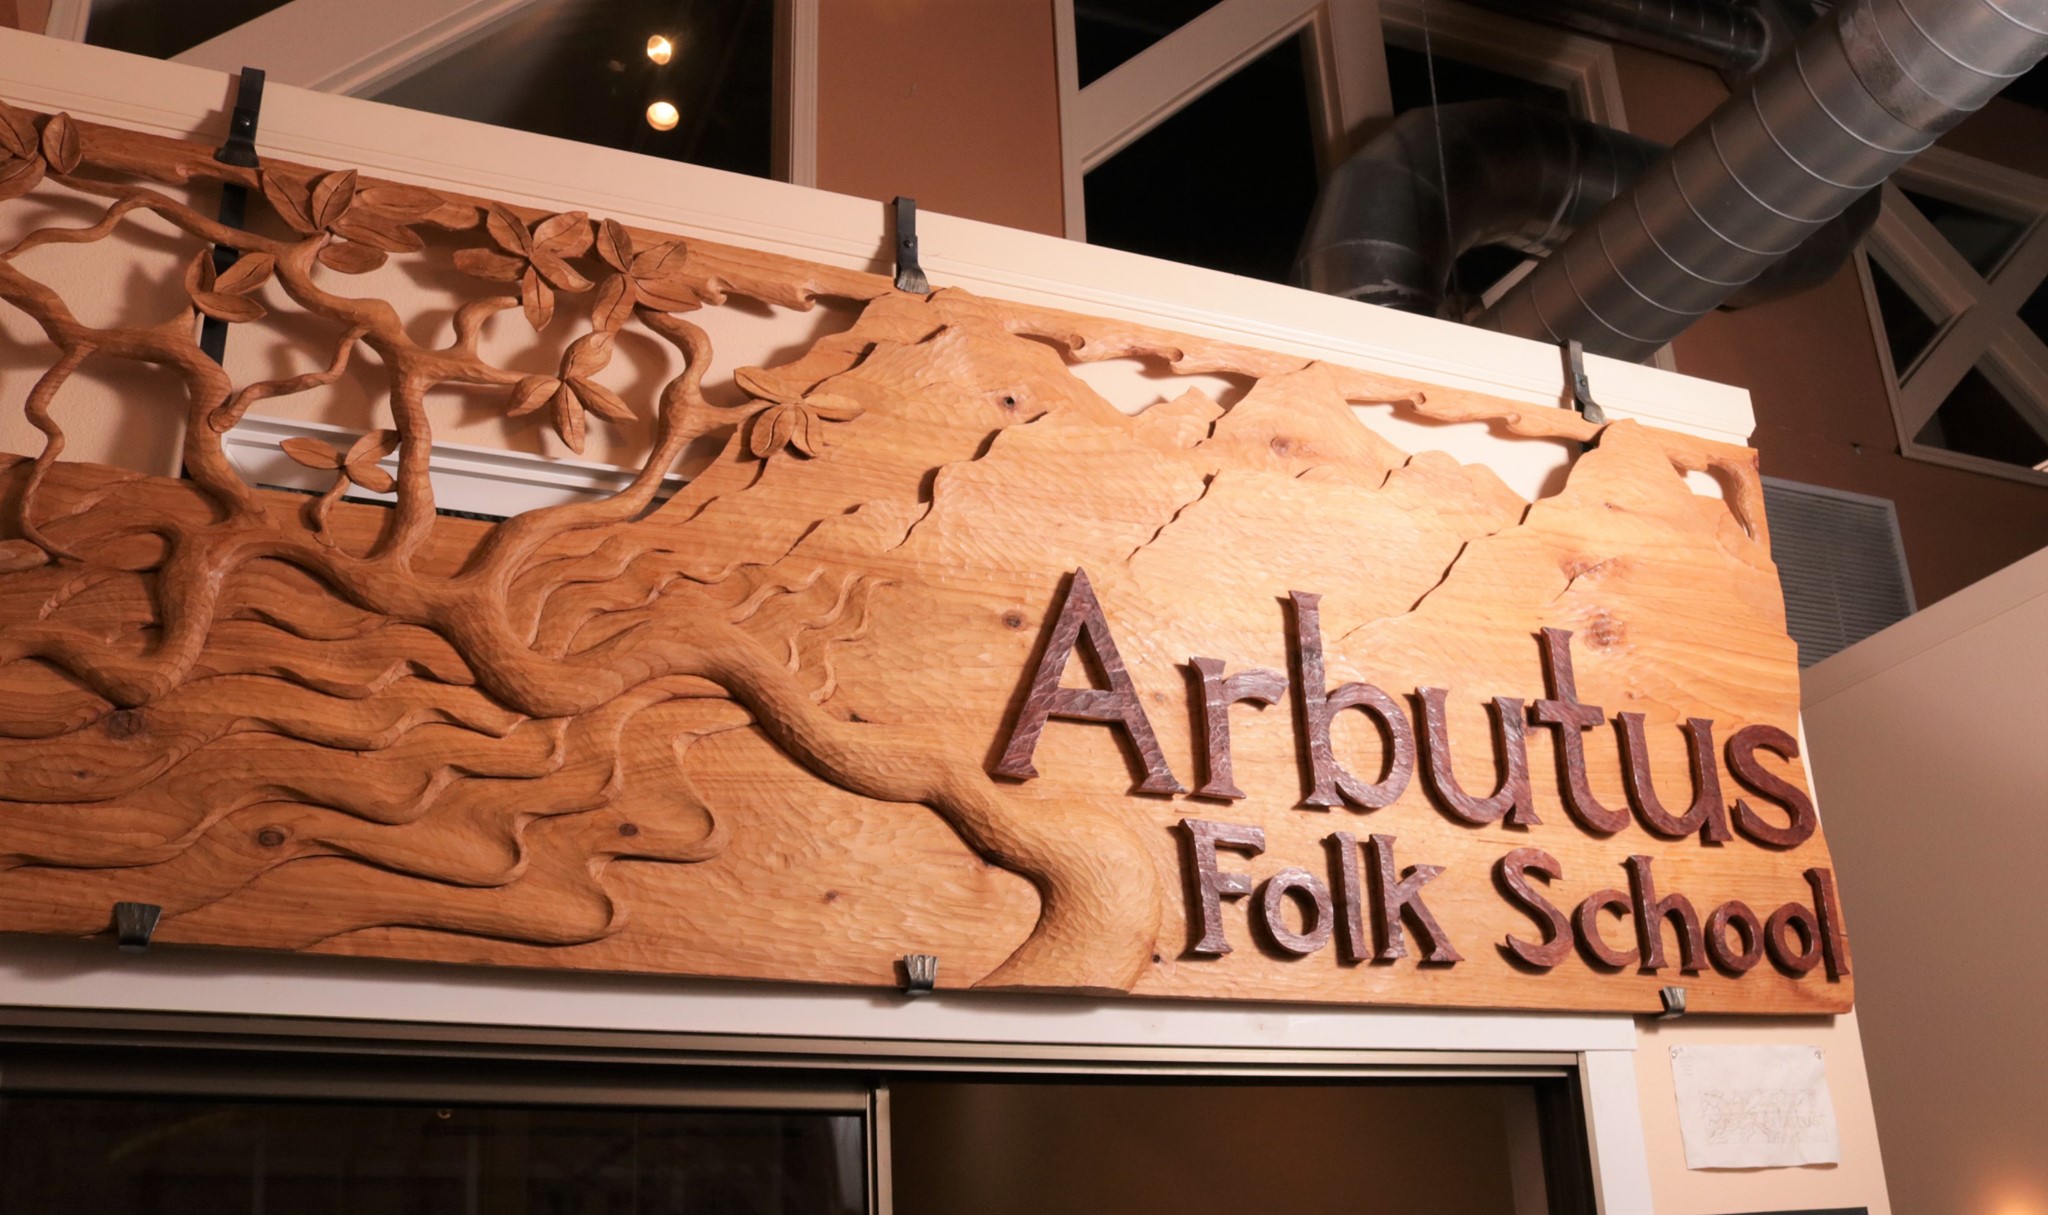 Arbutus Folk School